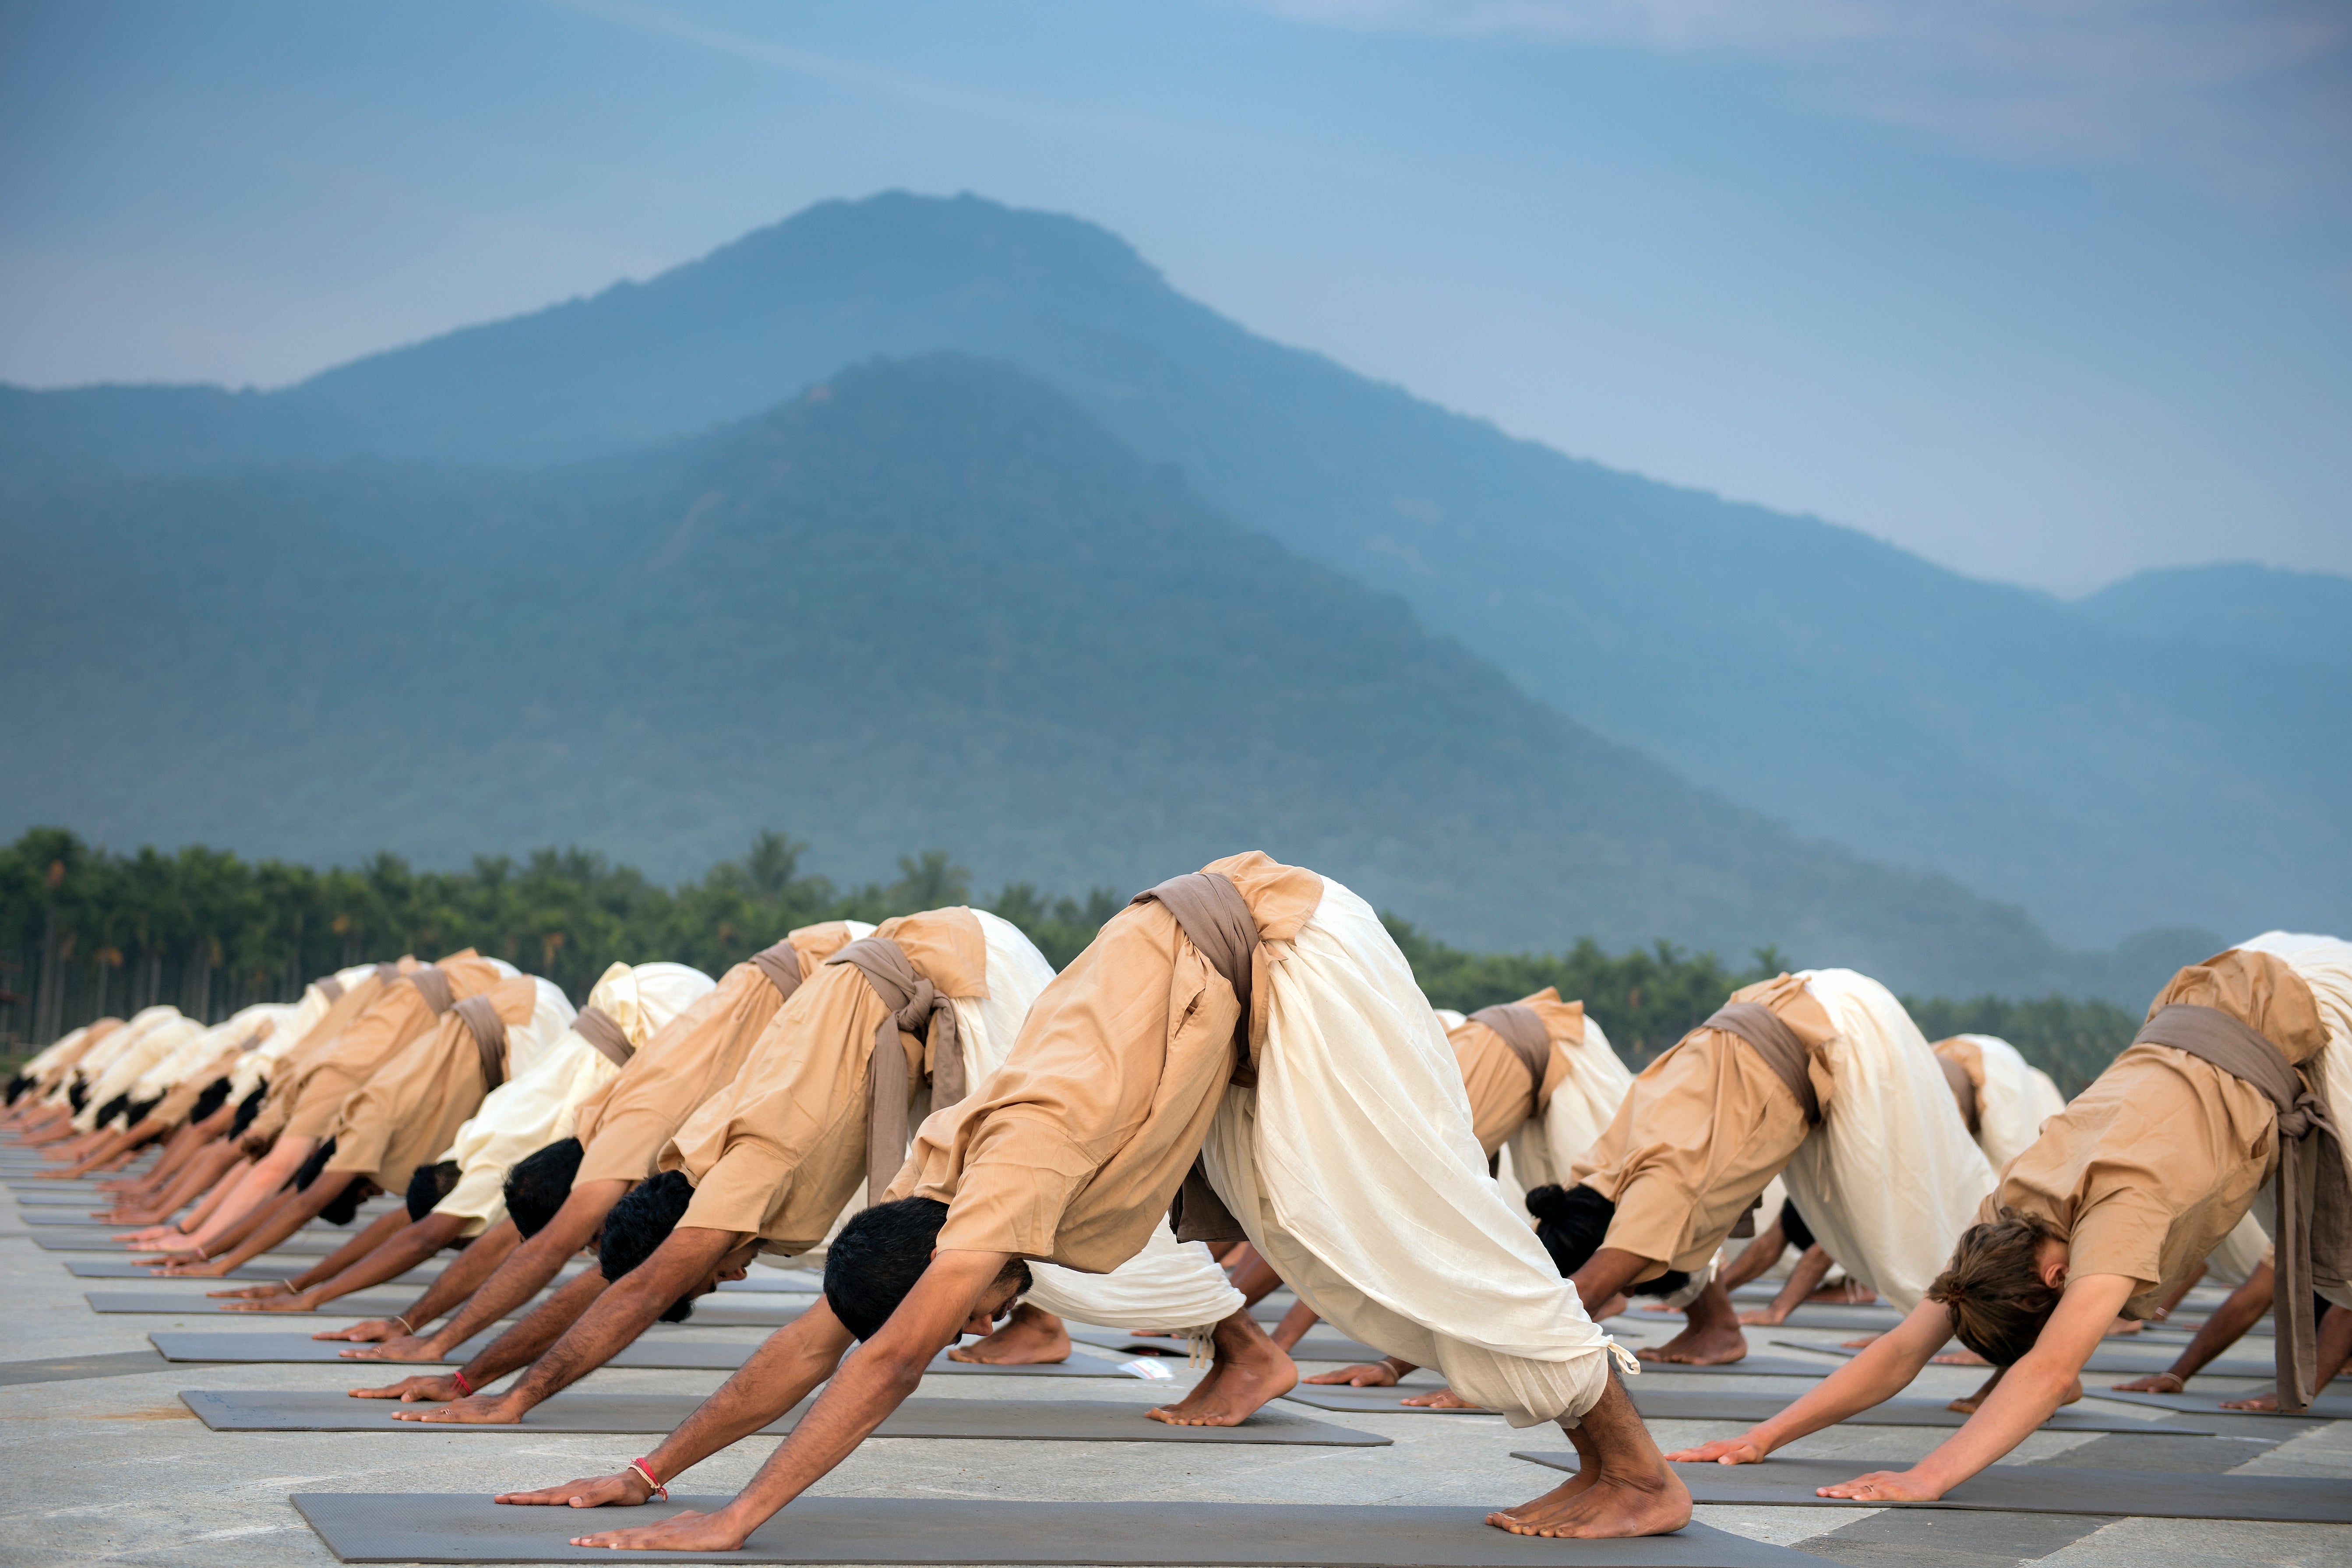 Hatha Yoga Asanas And Its Benefits In Dailed | Styles At Life